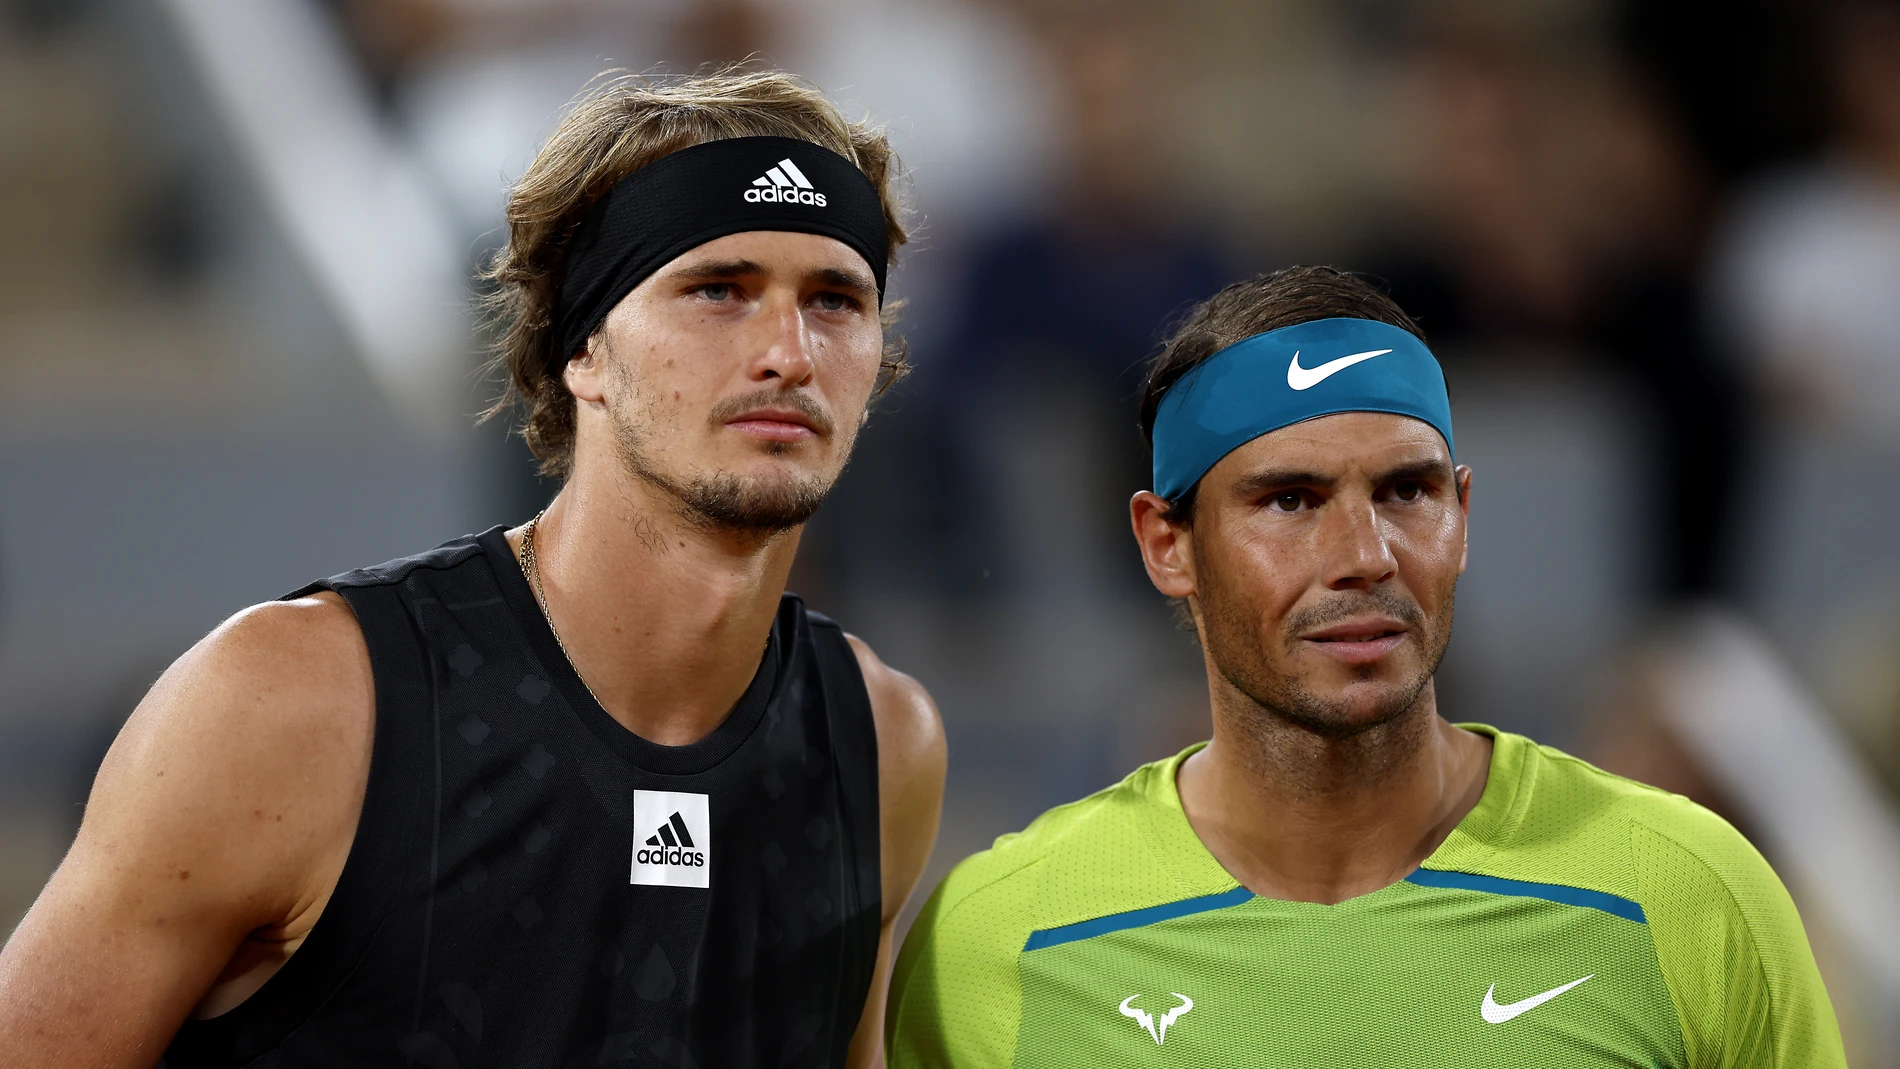 Roland Garros: Rafa Nadal vs Alexander Zverev, semifinal en directo